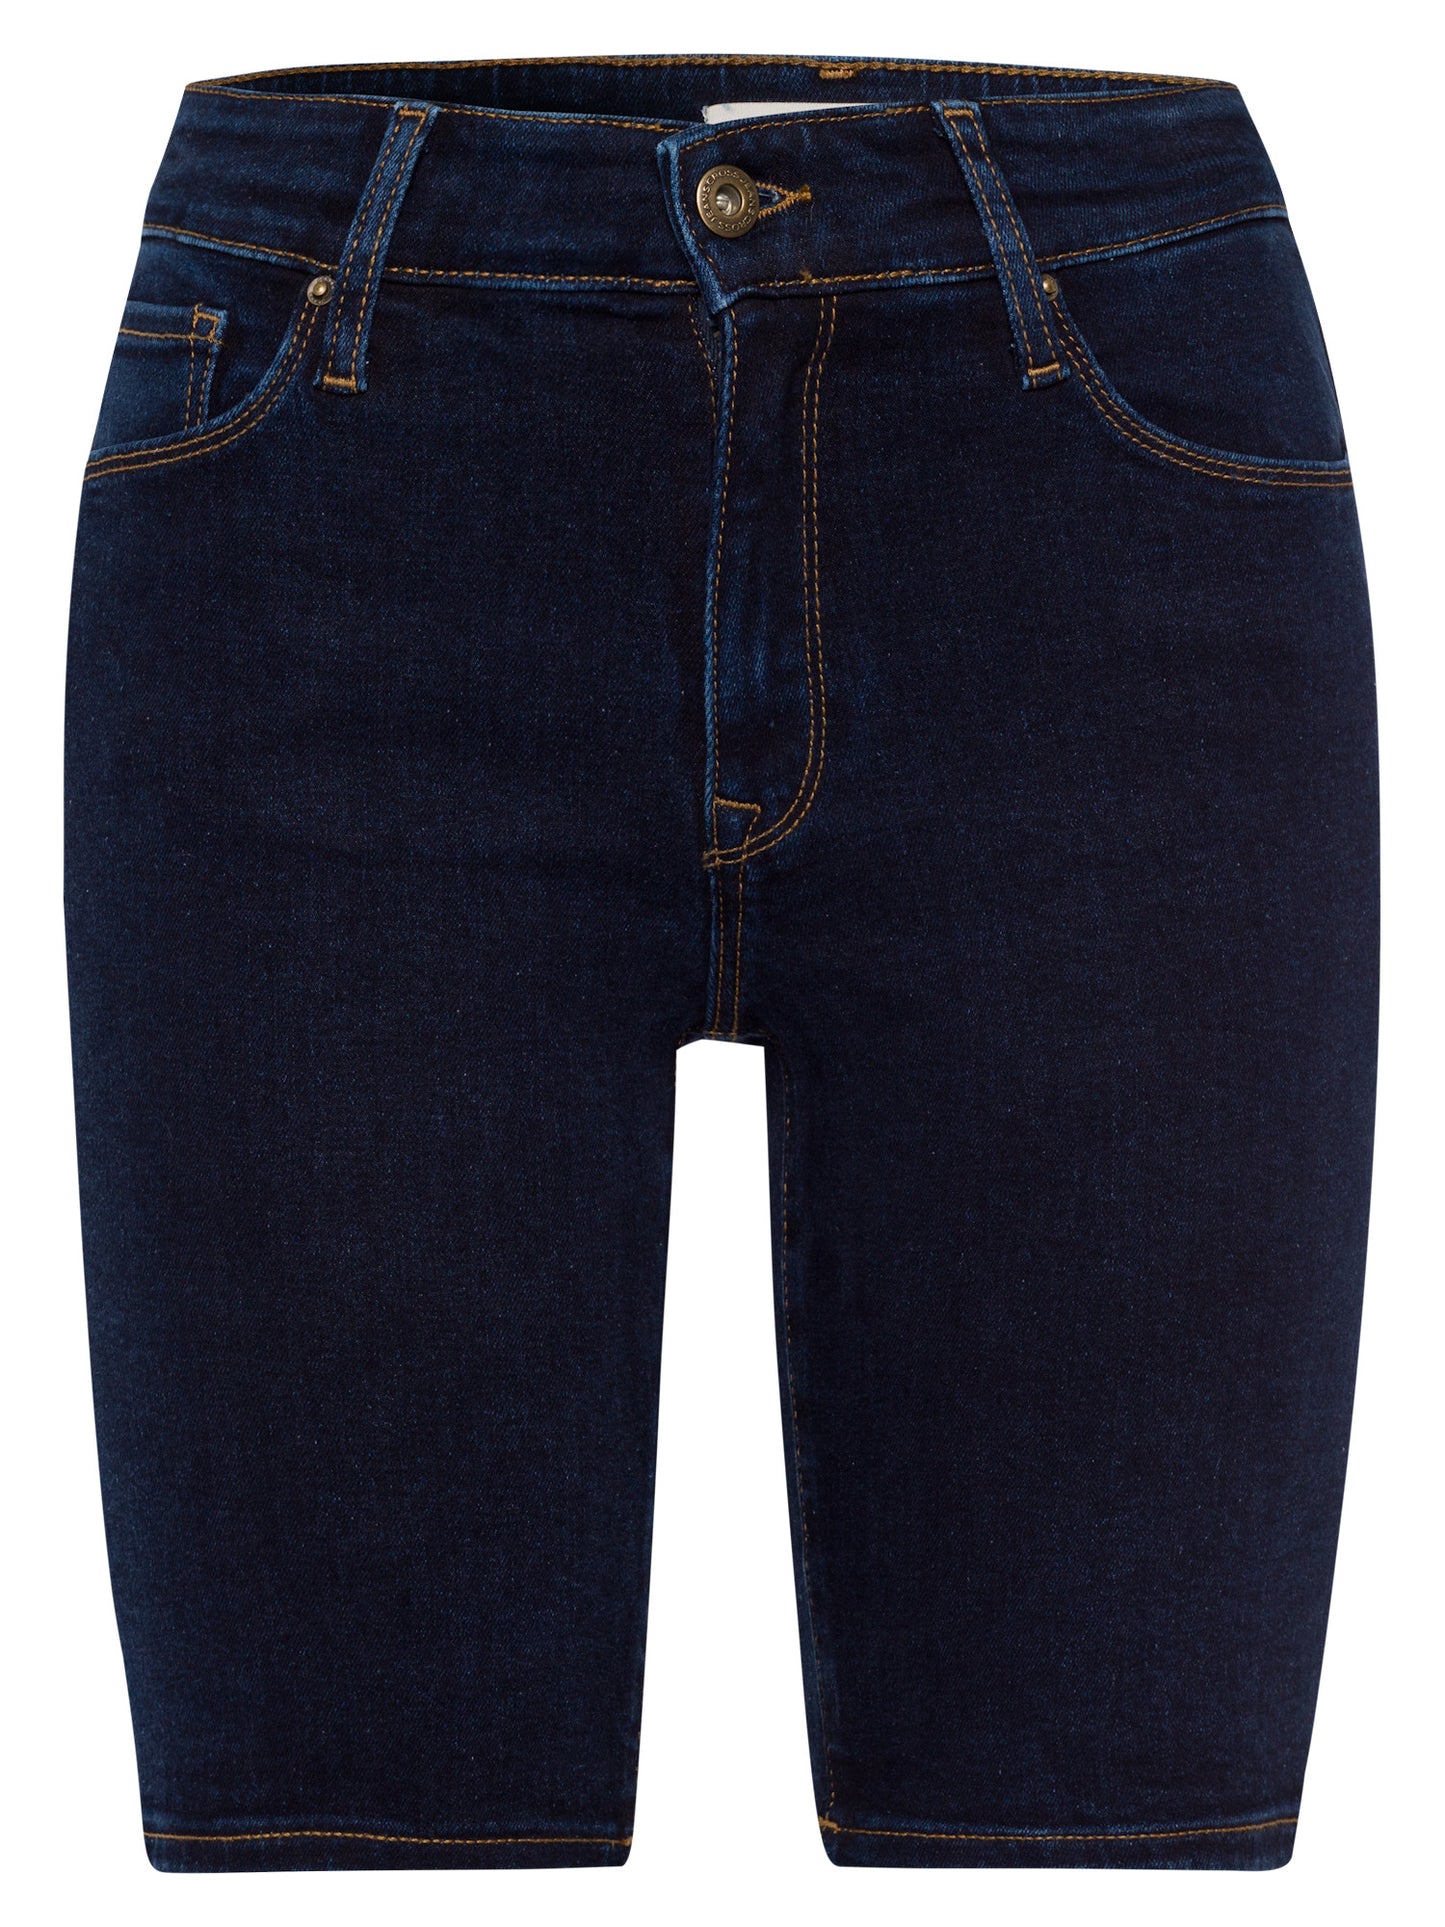 Women's Jeans Shorts Anya Slim Fit High Waist dark blue